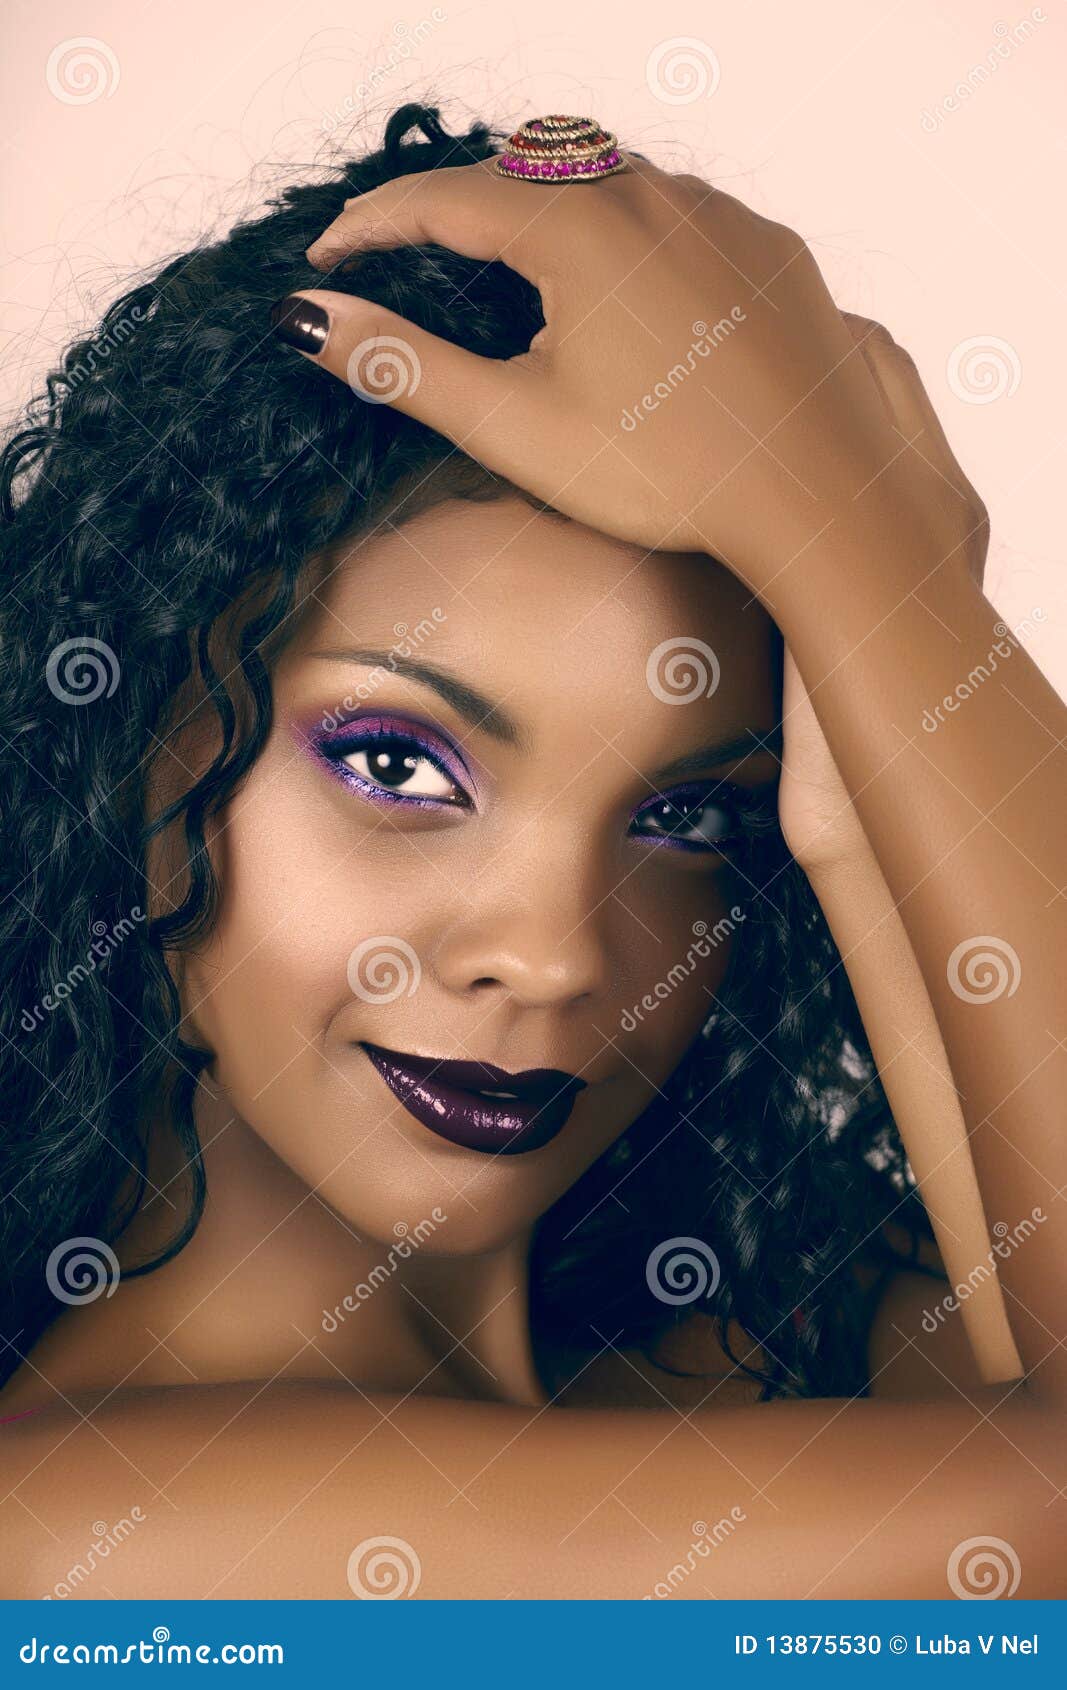 mulher-bonita-africana-com-cabelo-curly-13875530.jpg